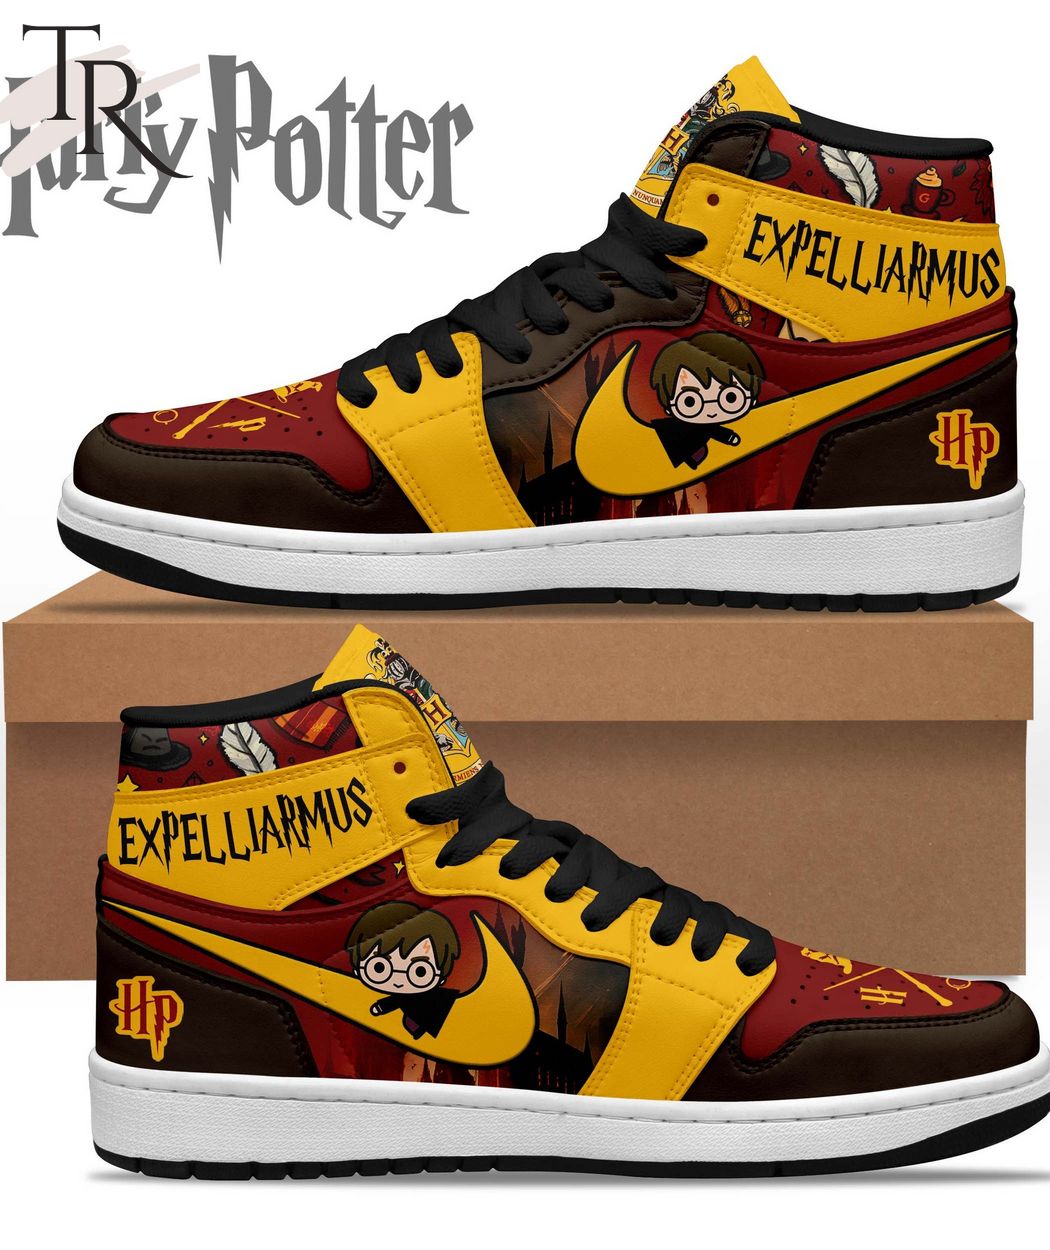 Harry Potter Expelliarmus Air Jordan 1, Hightop